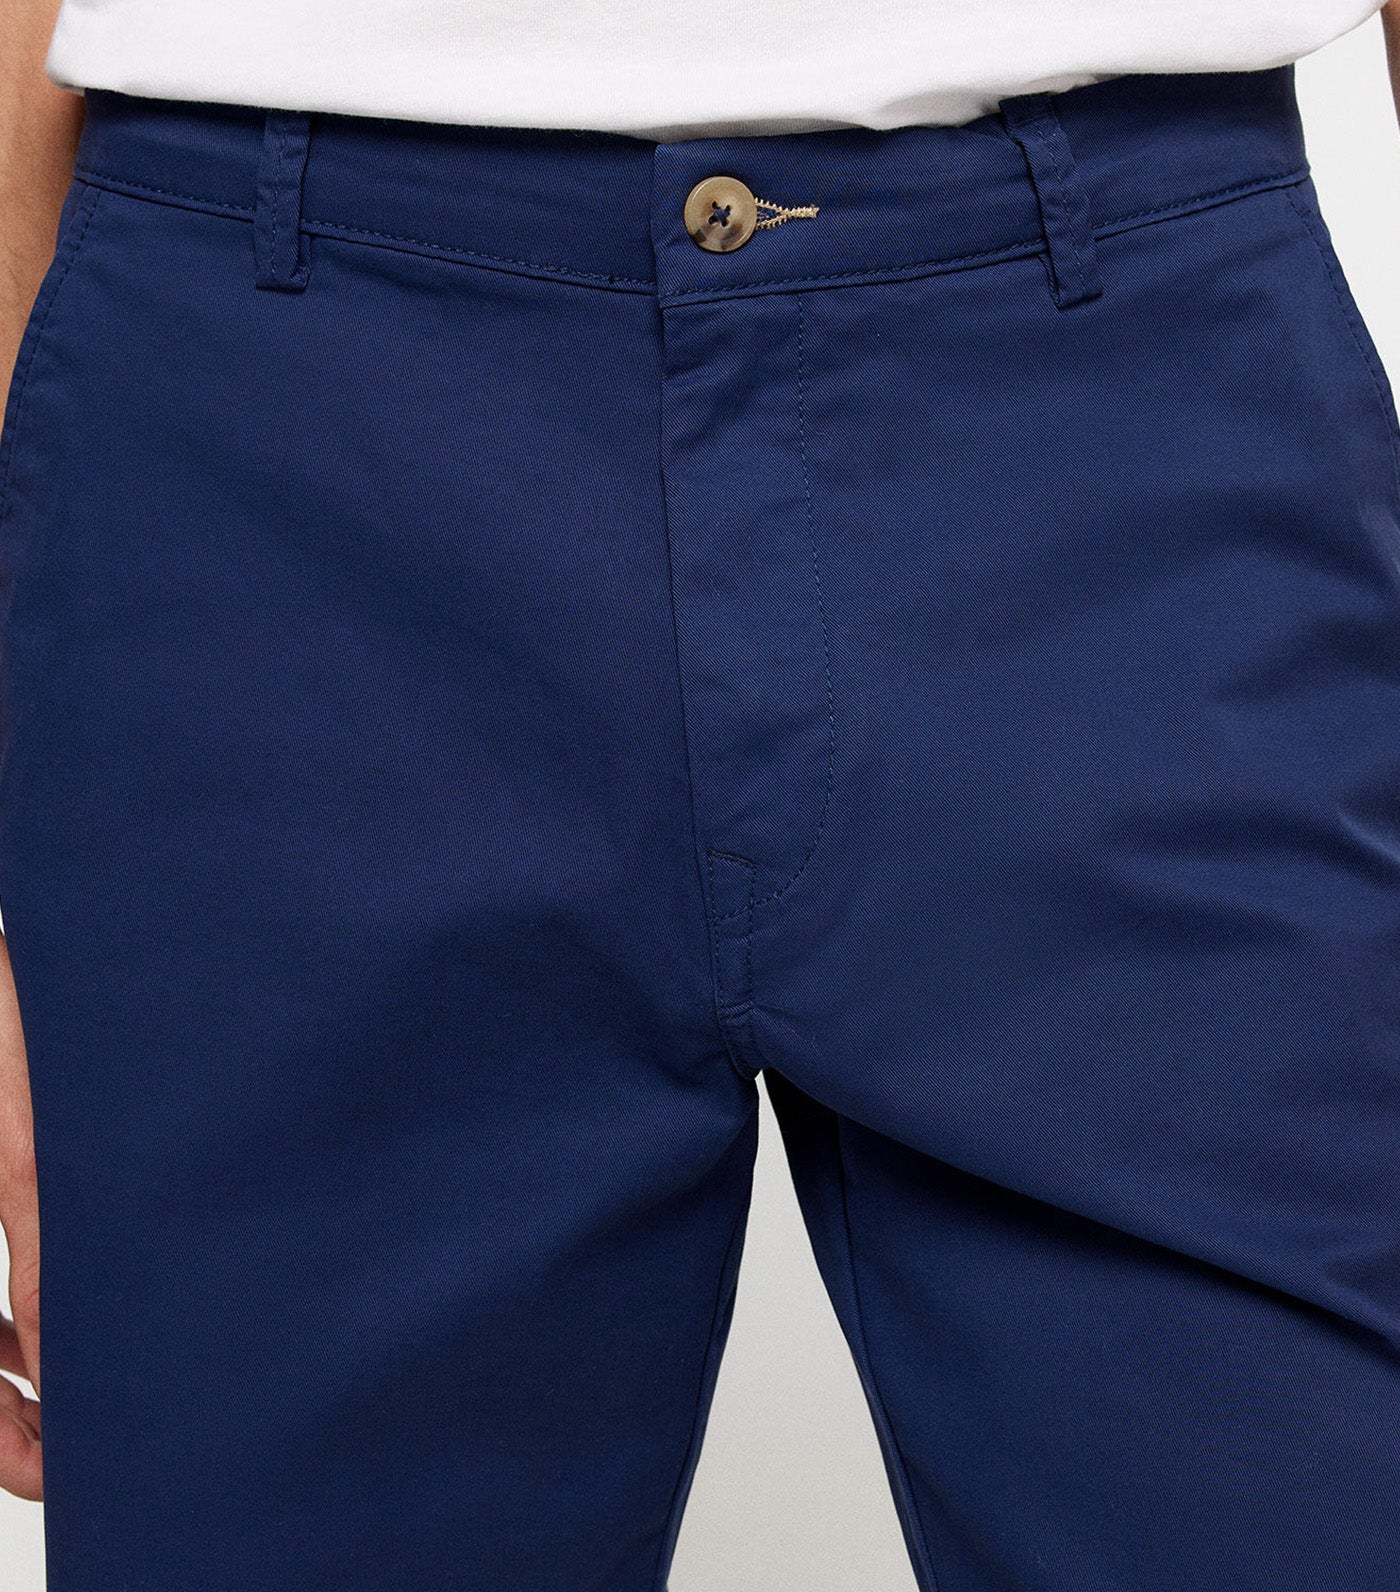 Bermuda Color Chino Shorts Dark Blue